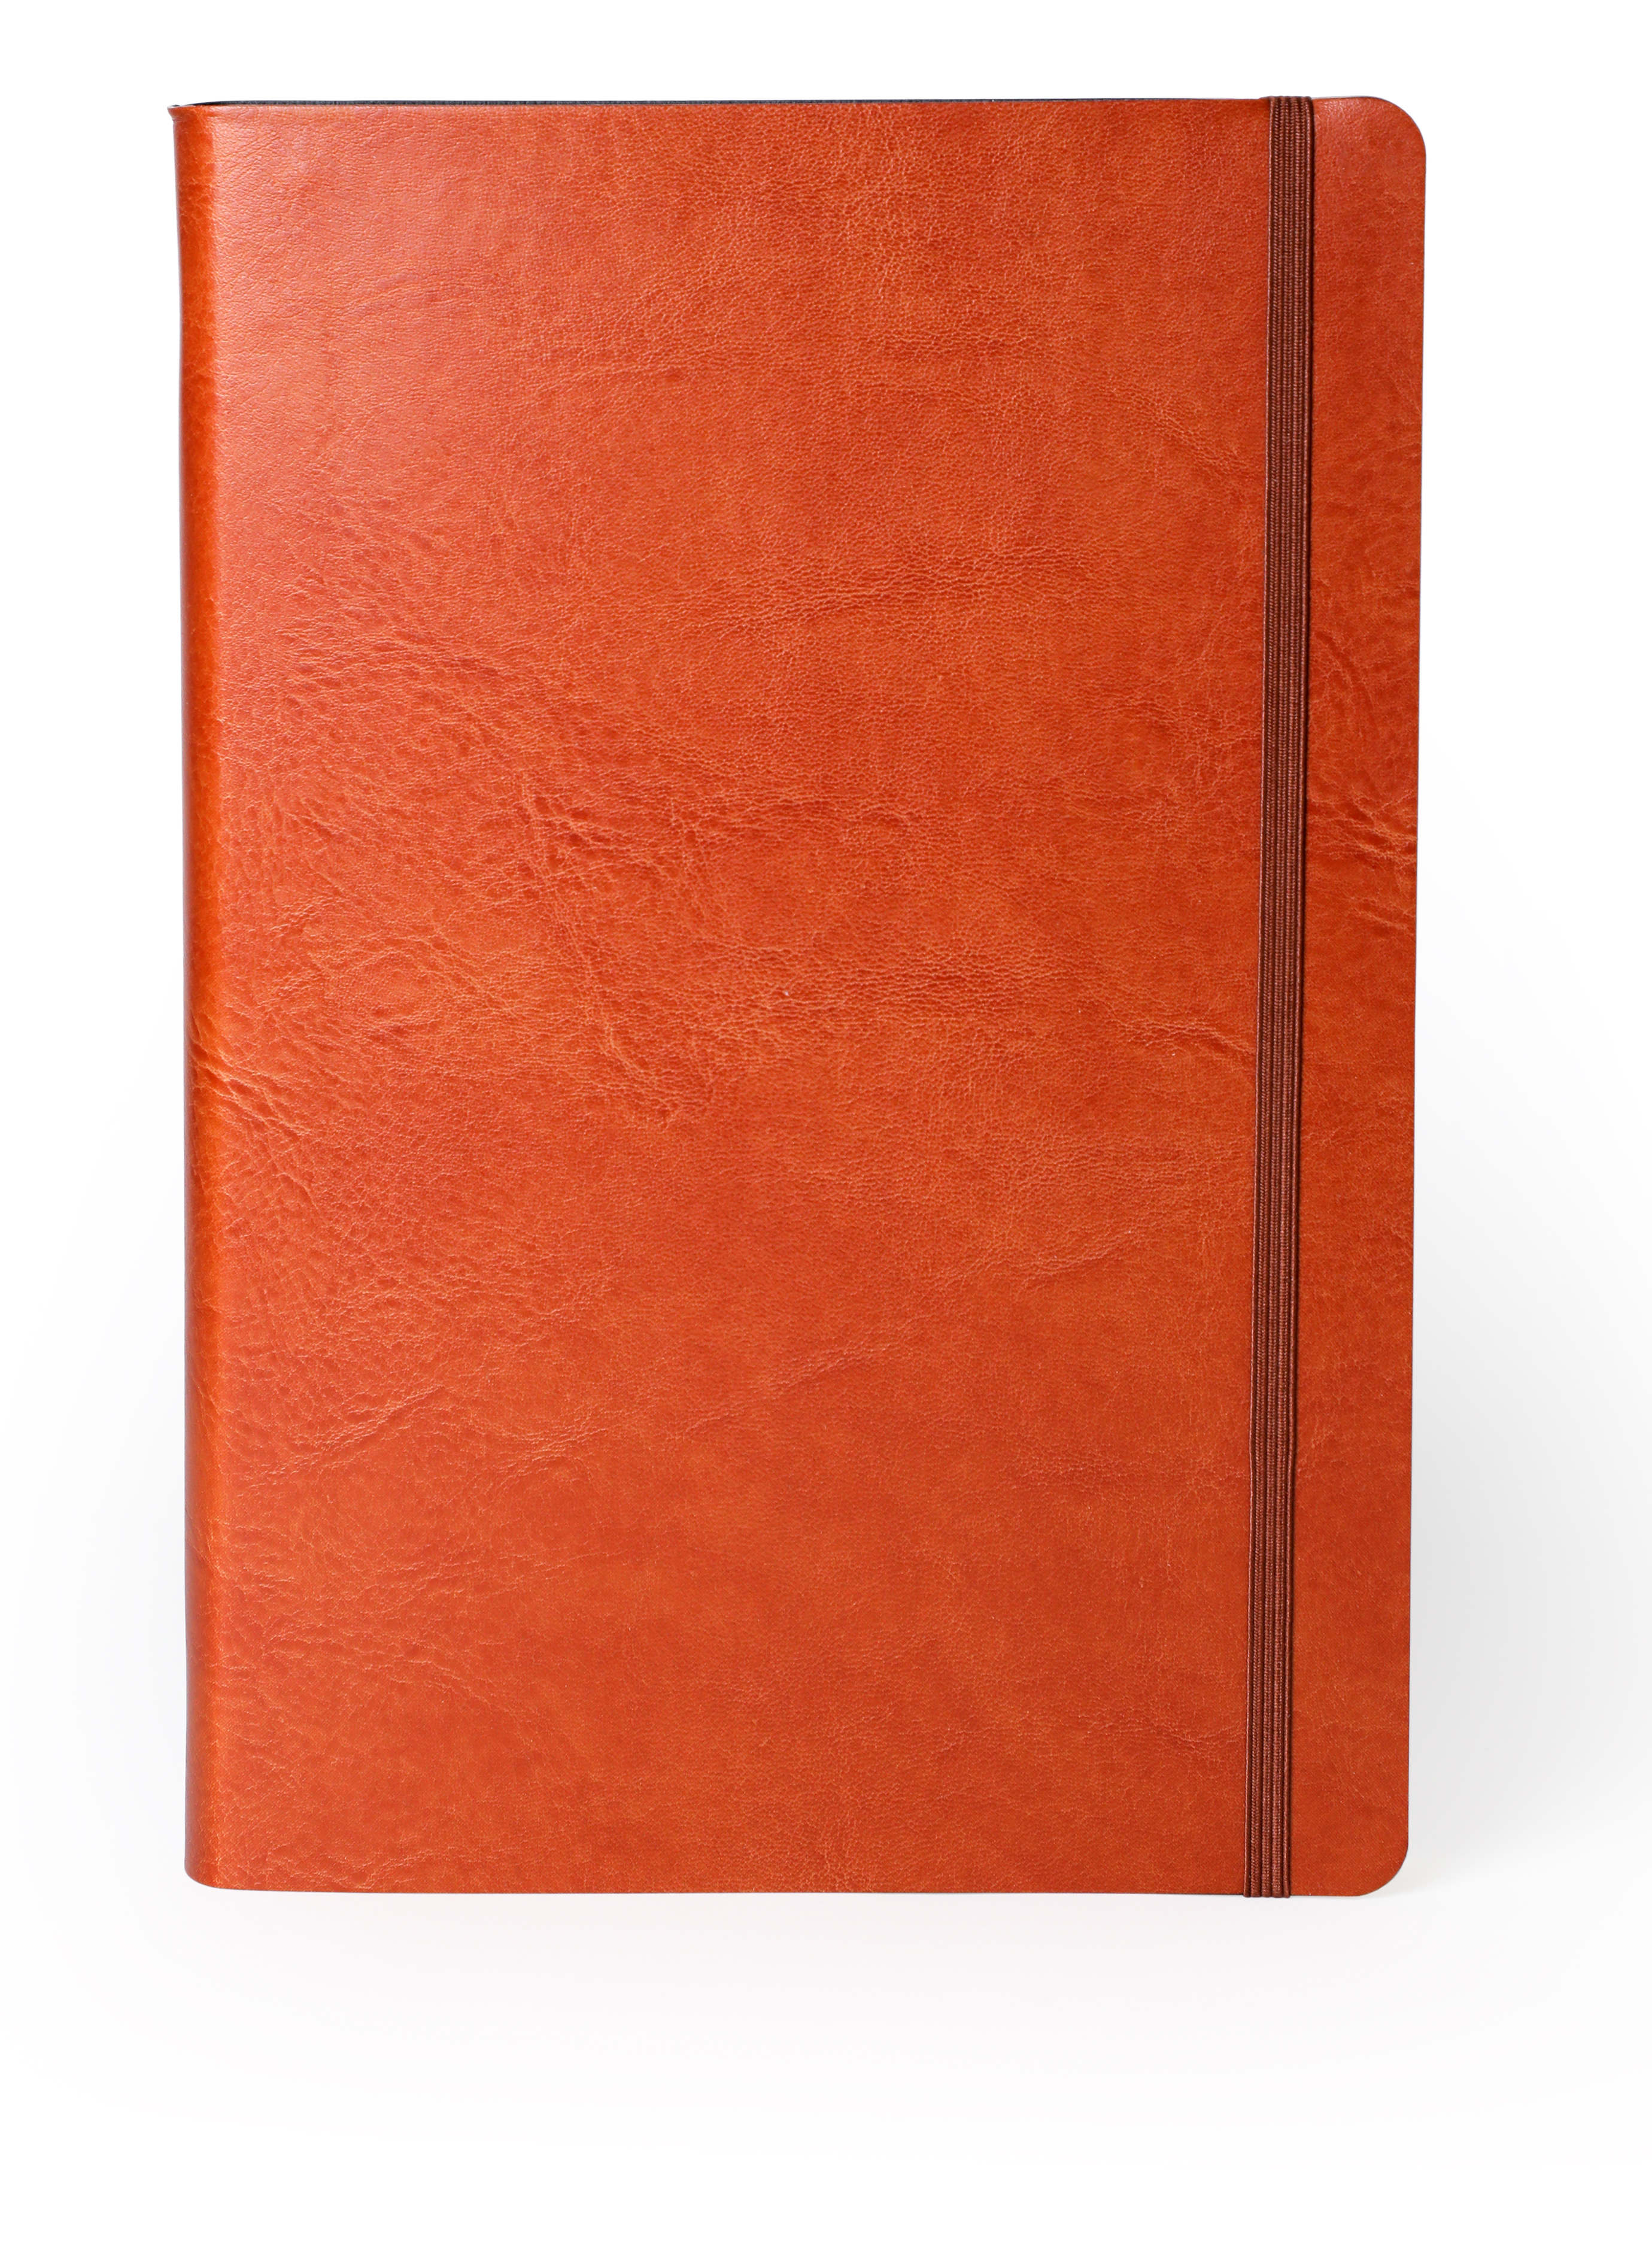 A4122-C - Bi-Color Notebook